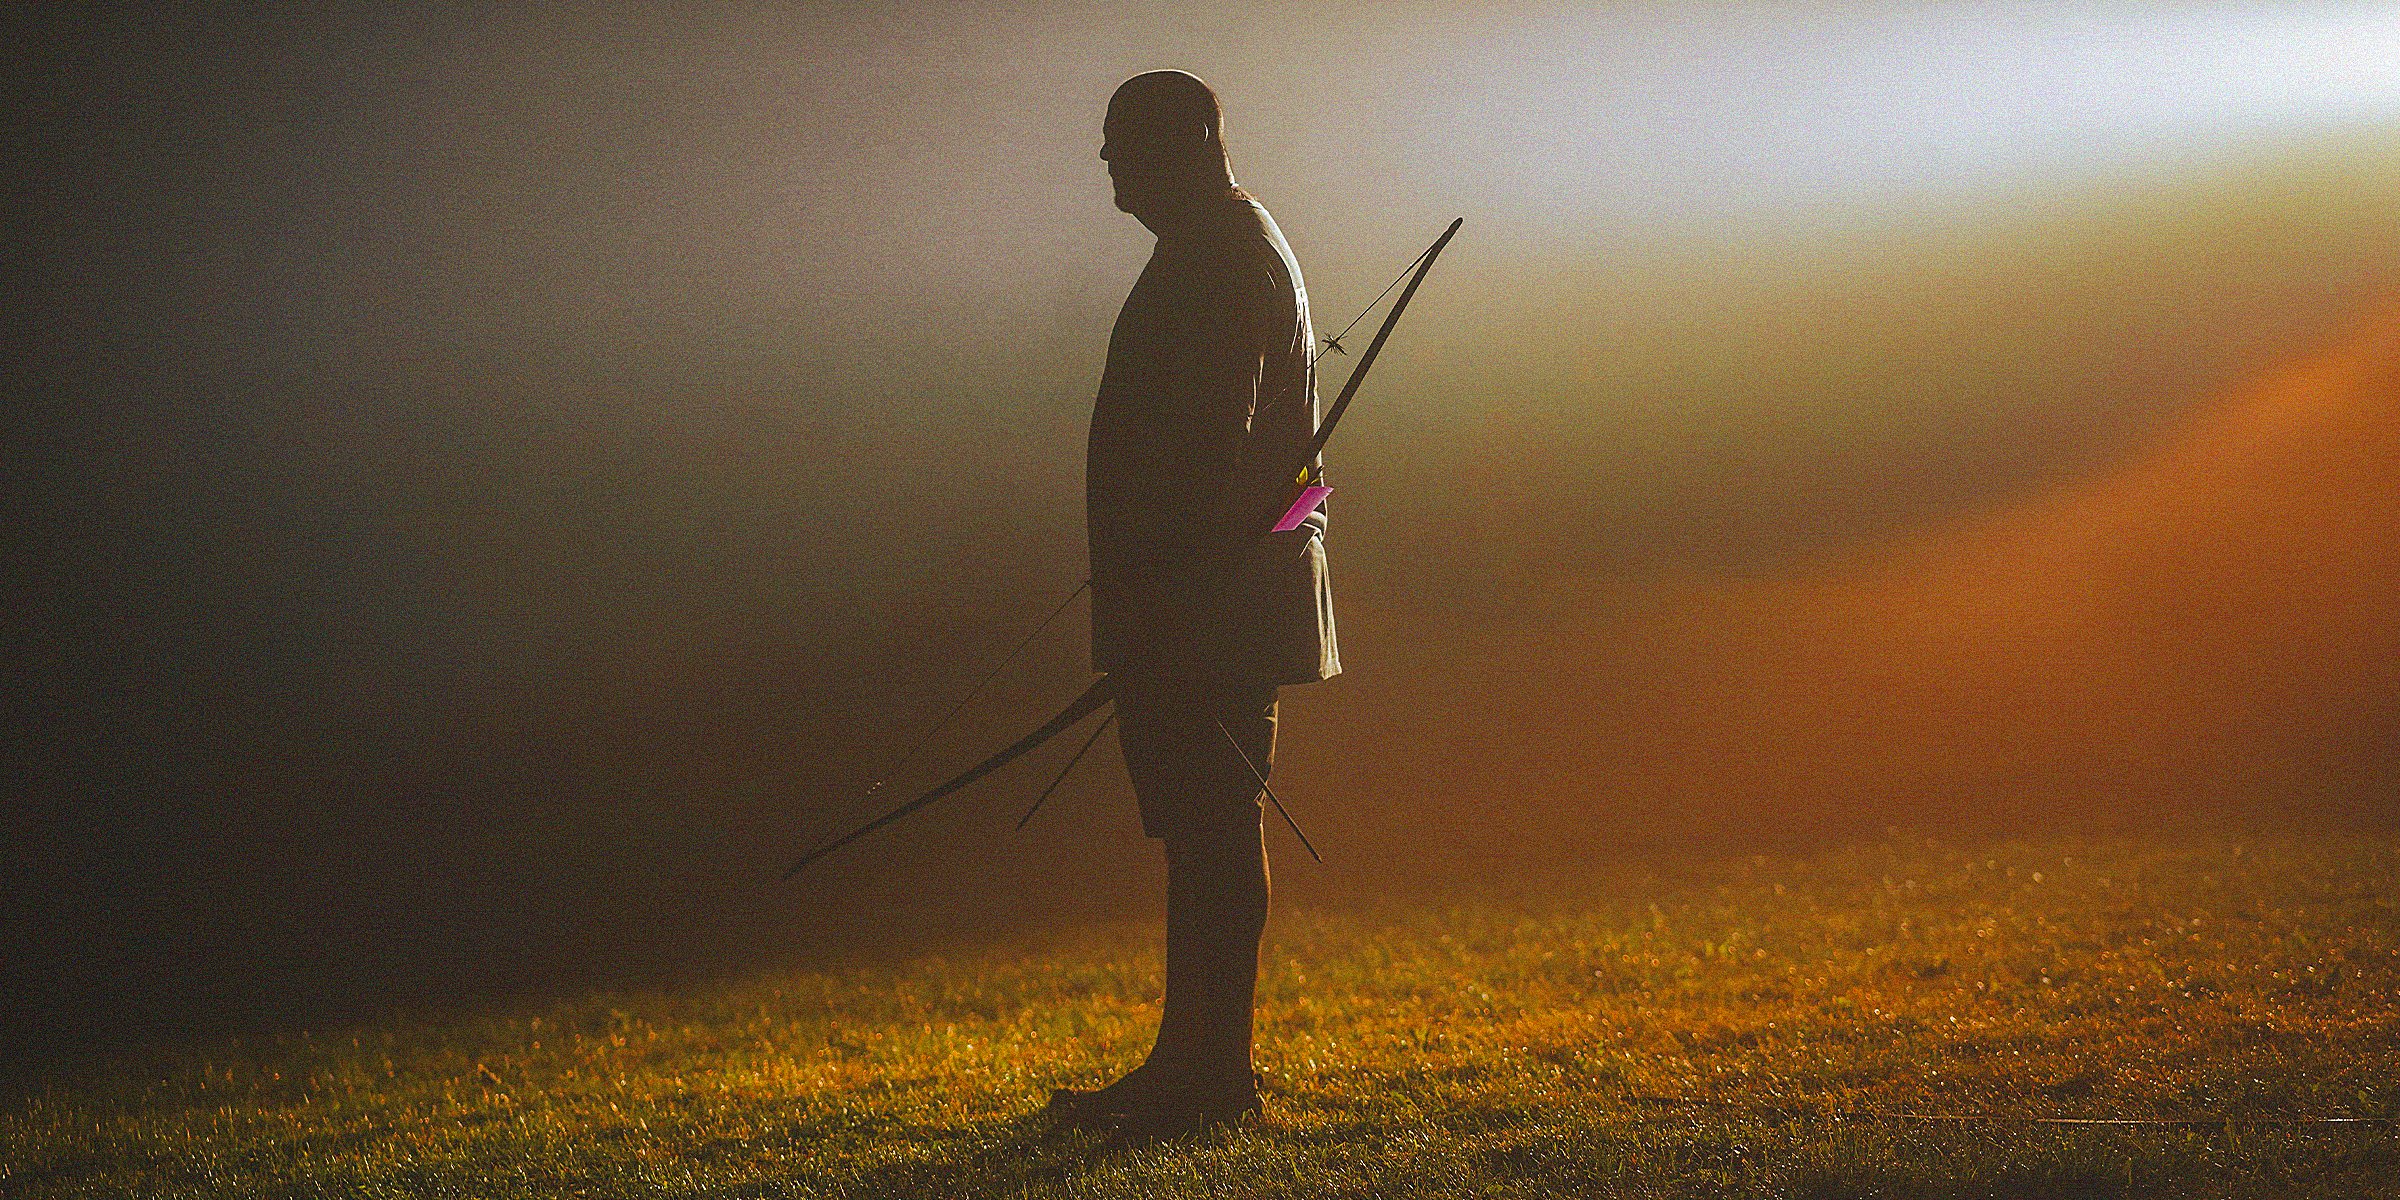 Unsplash | A man holding a bow and arrow